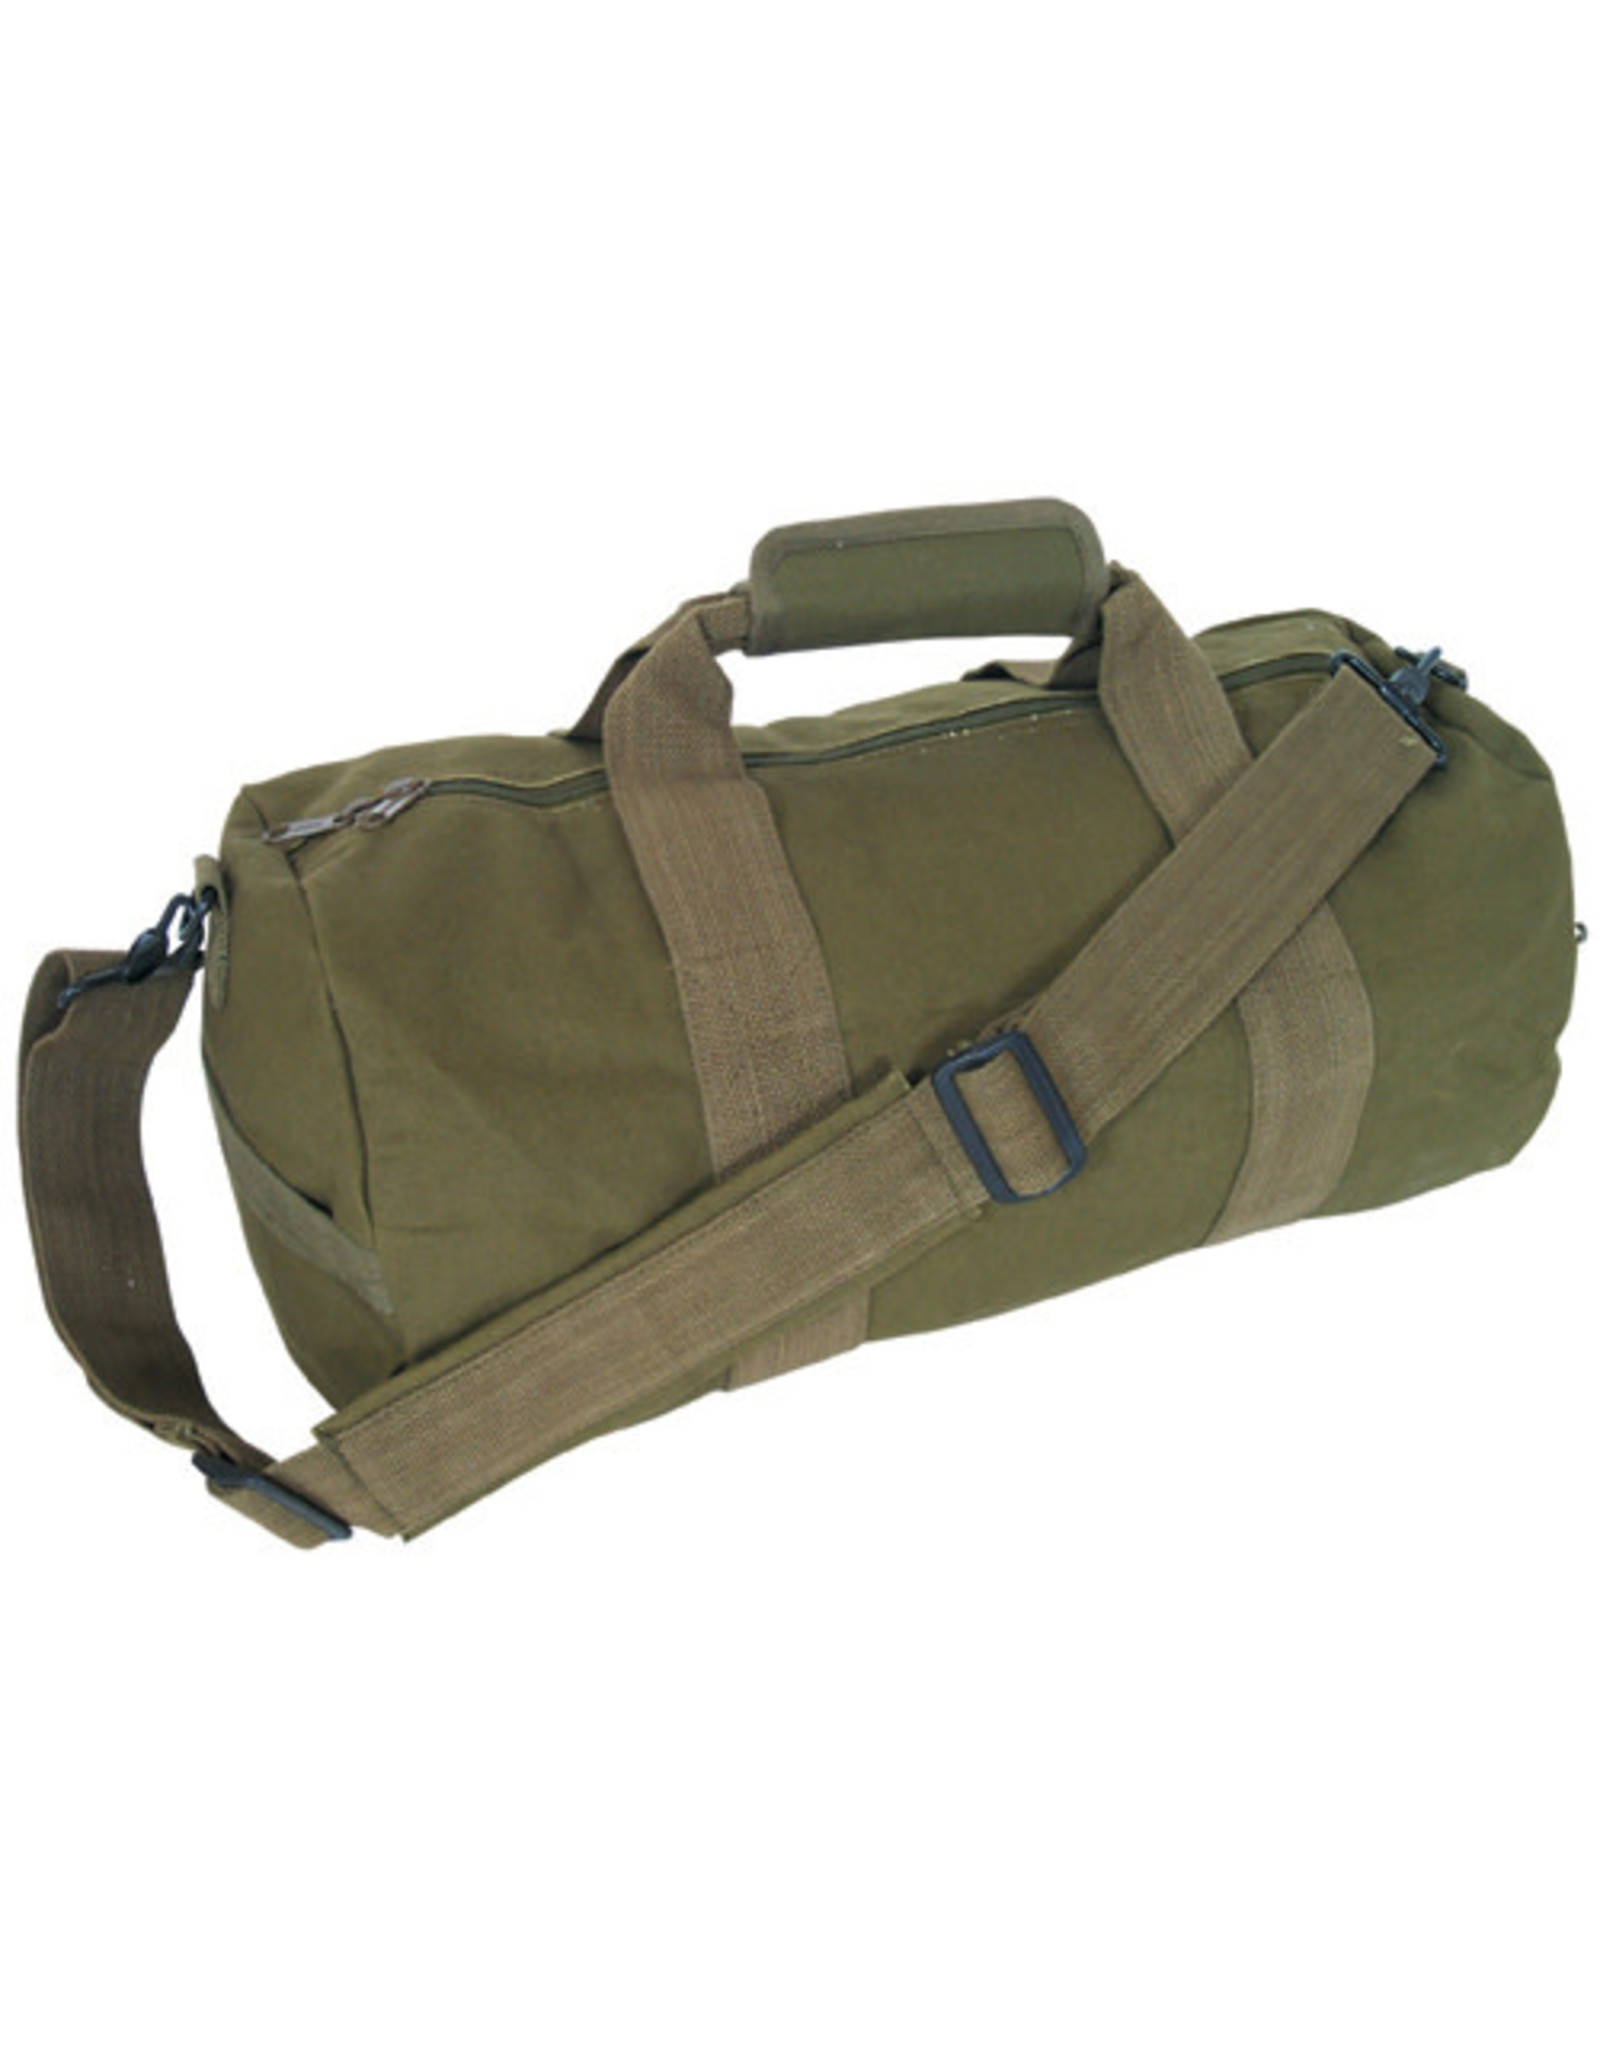 Roll bags. Outdoor products сумка. Сумка для большой радиостанции. Tactical Roller Bag. Duffle Bag small Dutch Army.